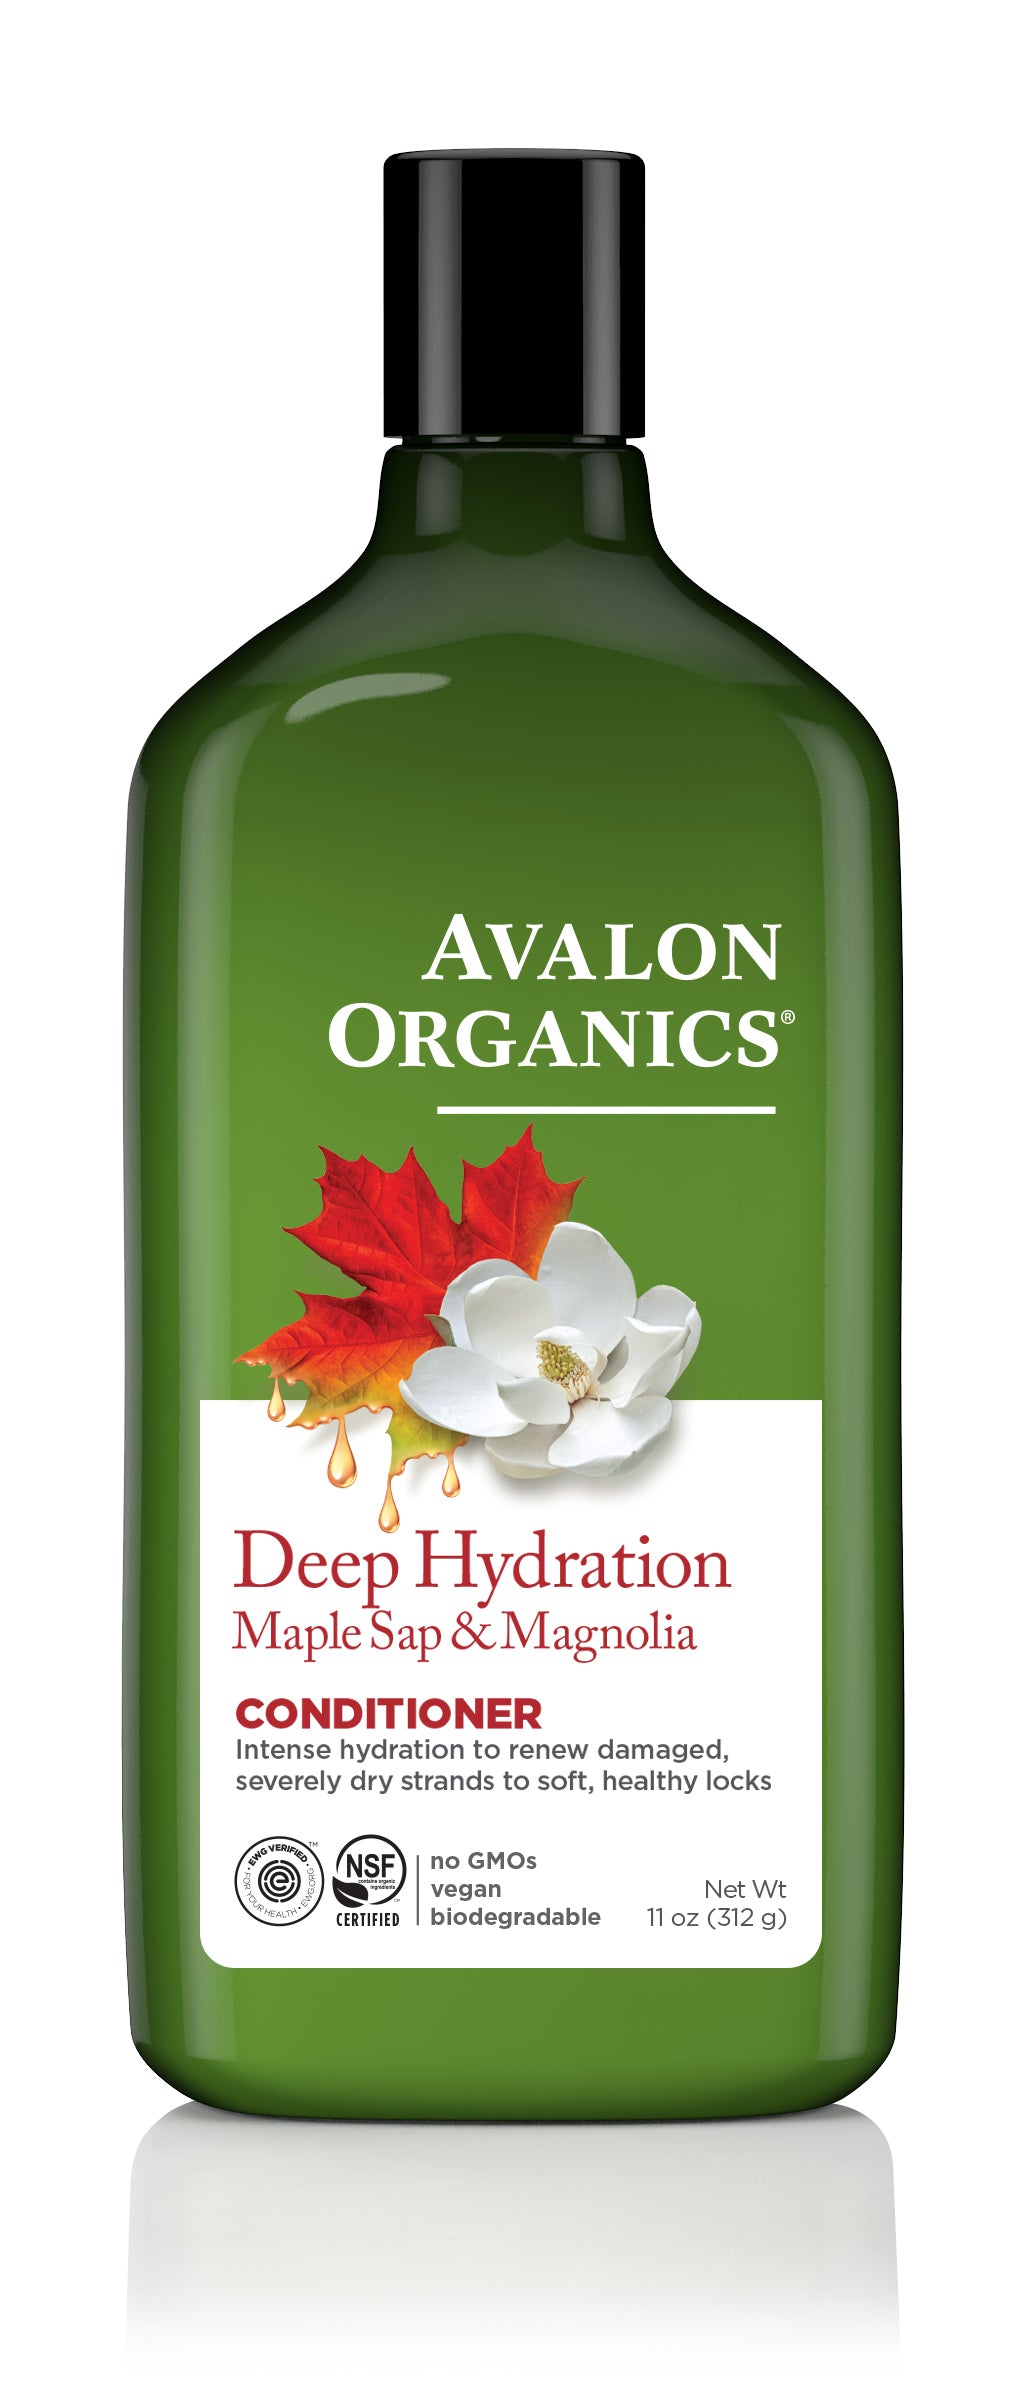 Deep Hydration Maple Sap & Magnolia